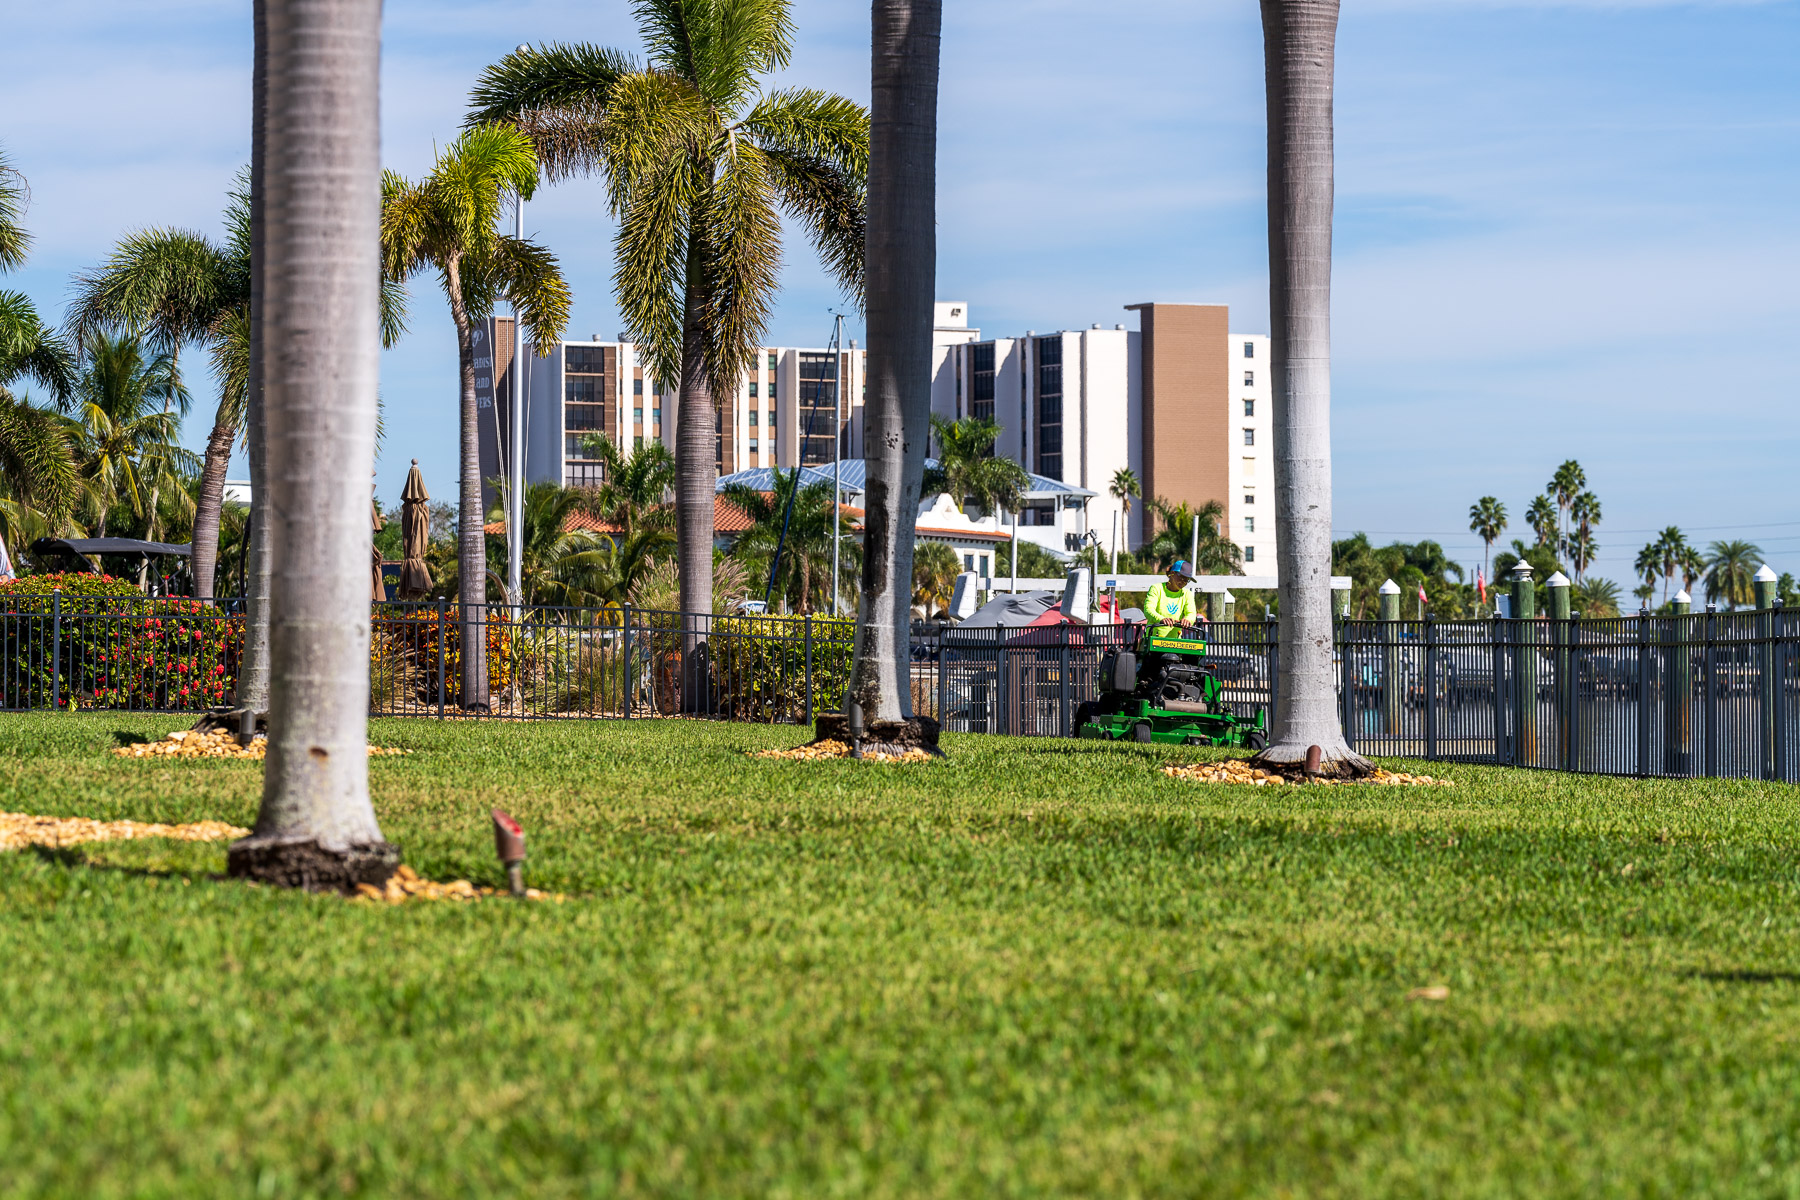 healthy grass around palm trees